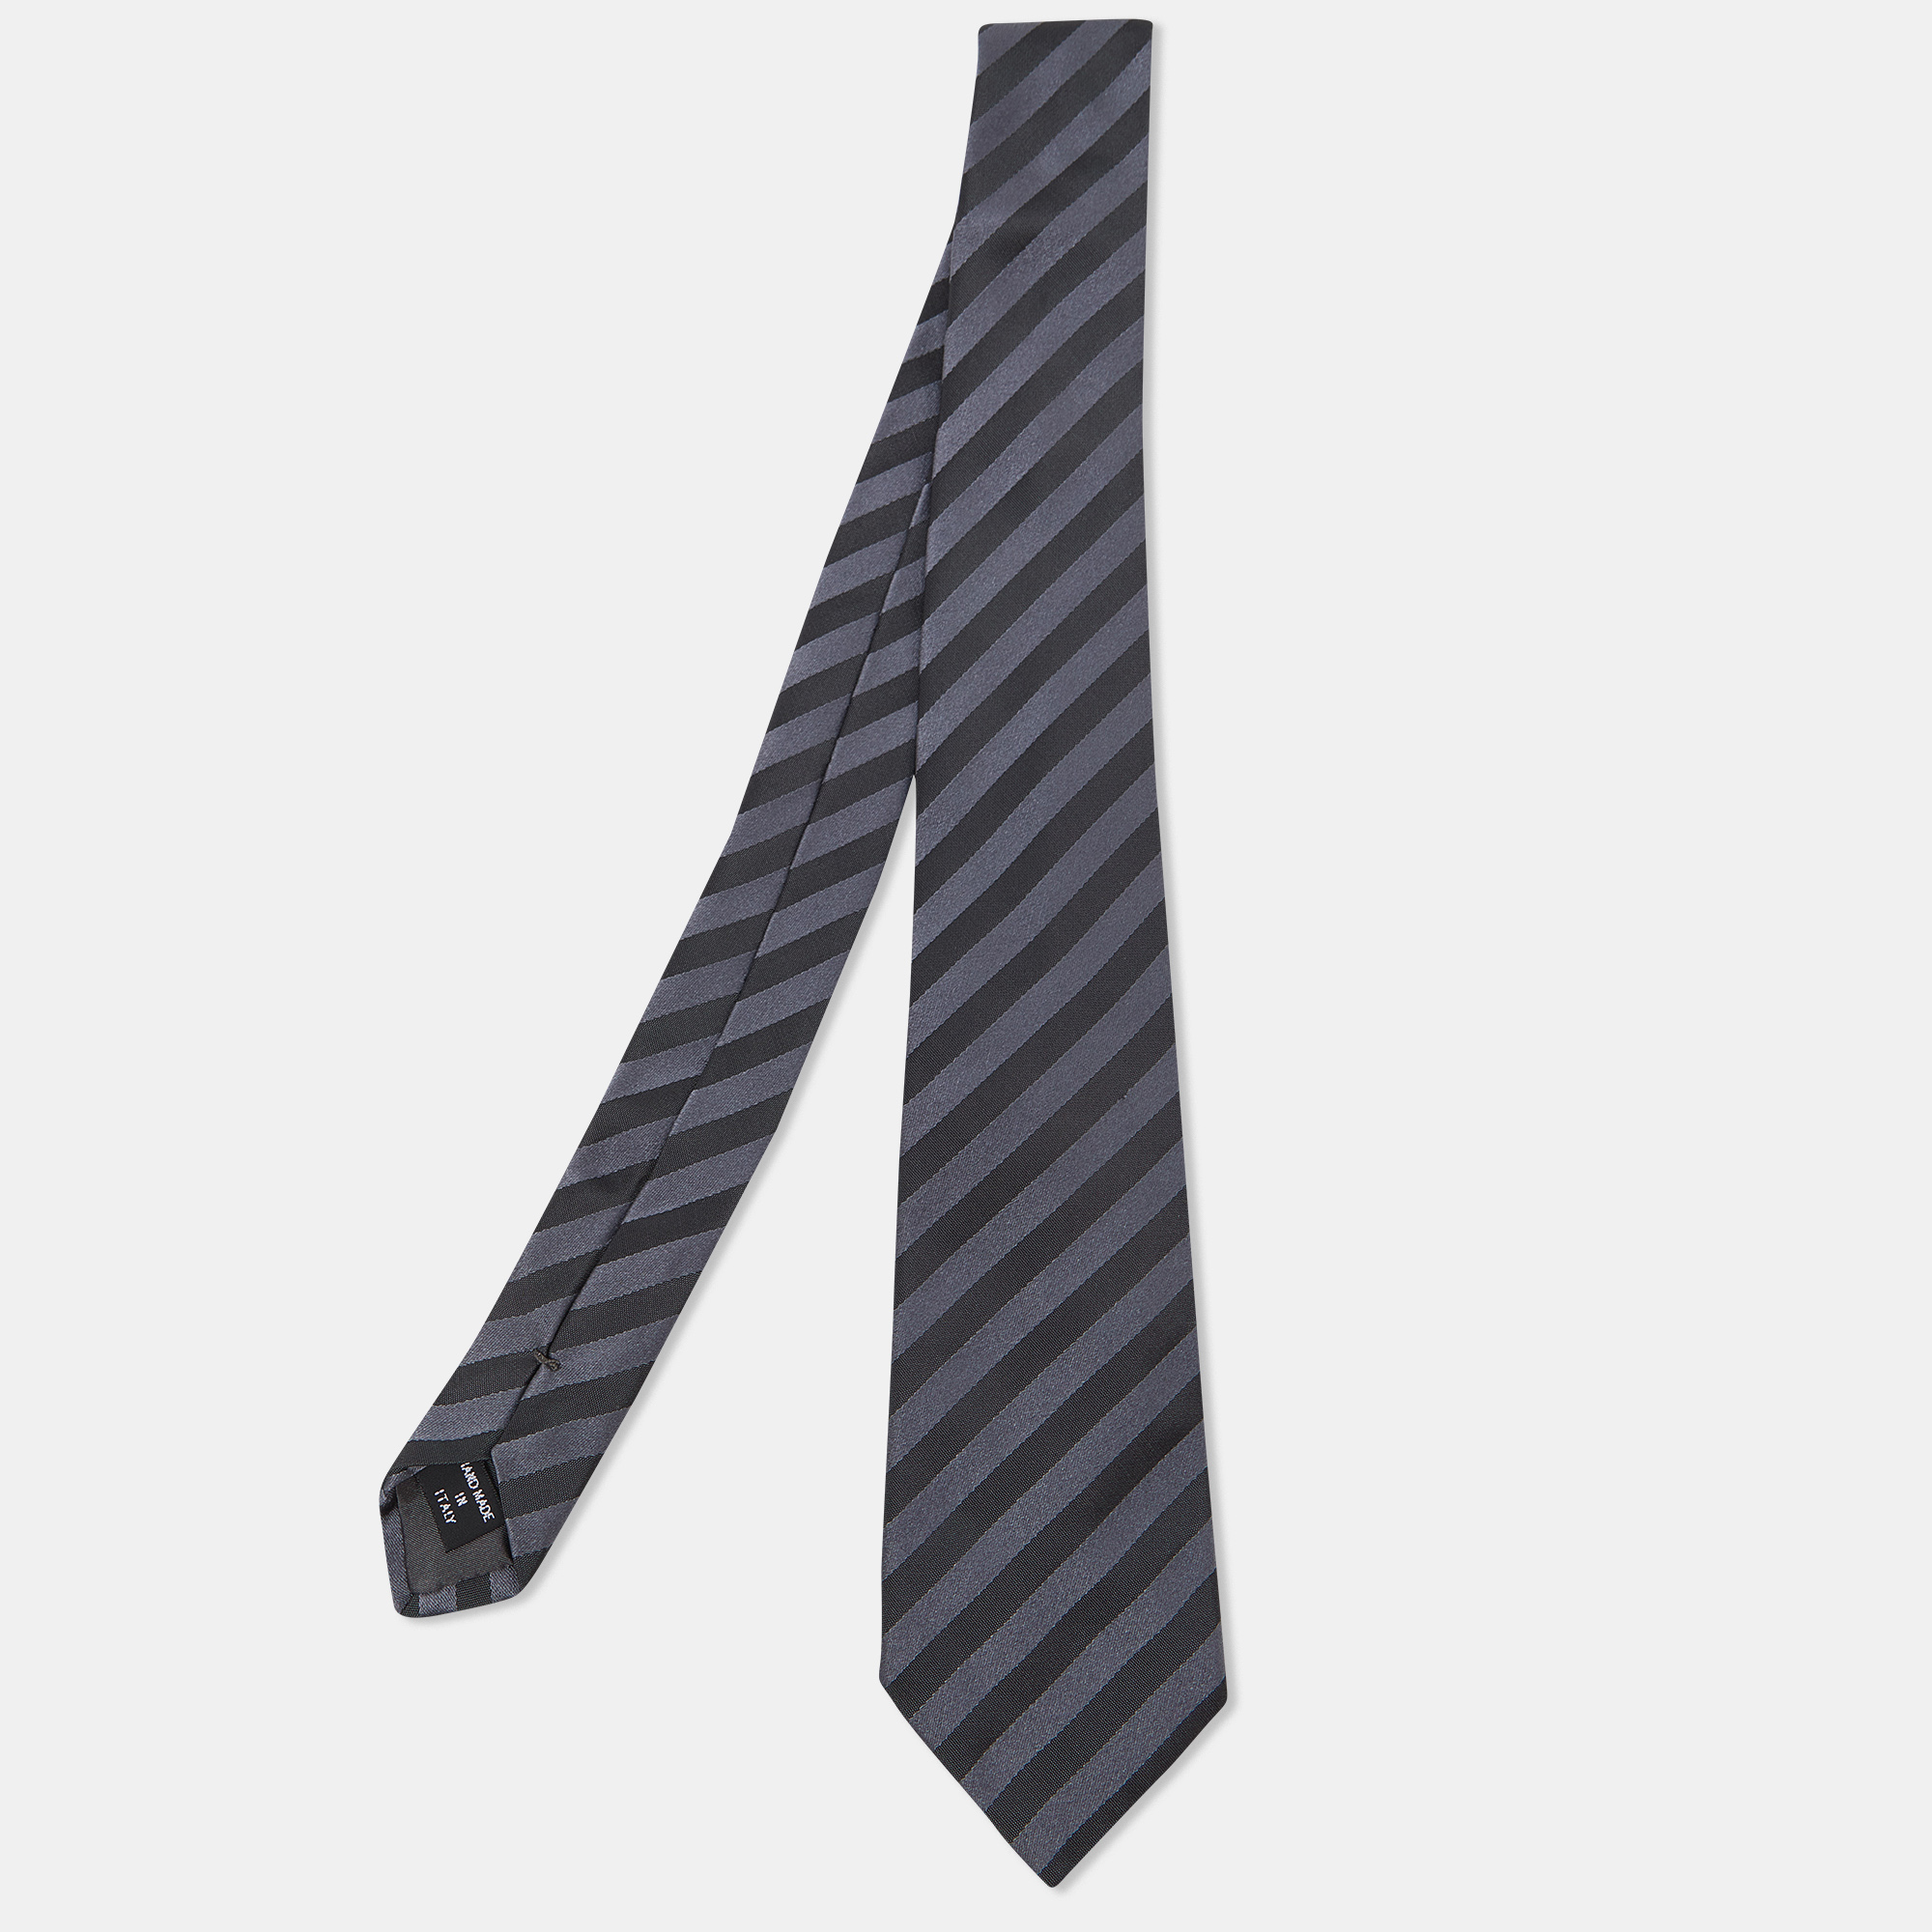 Giorgio armani grey diagonal striped silk tie